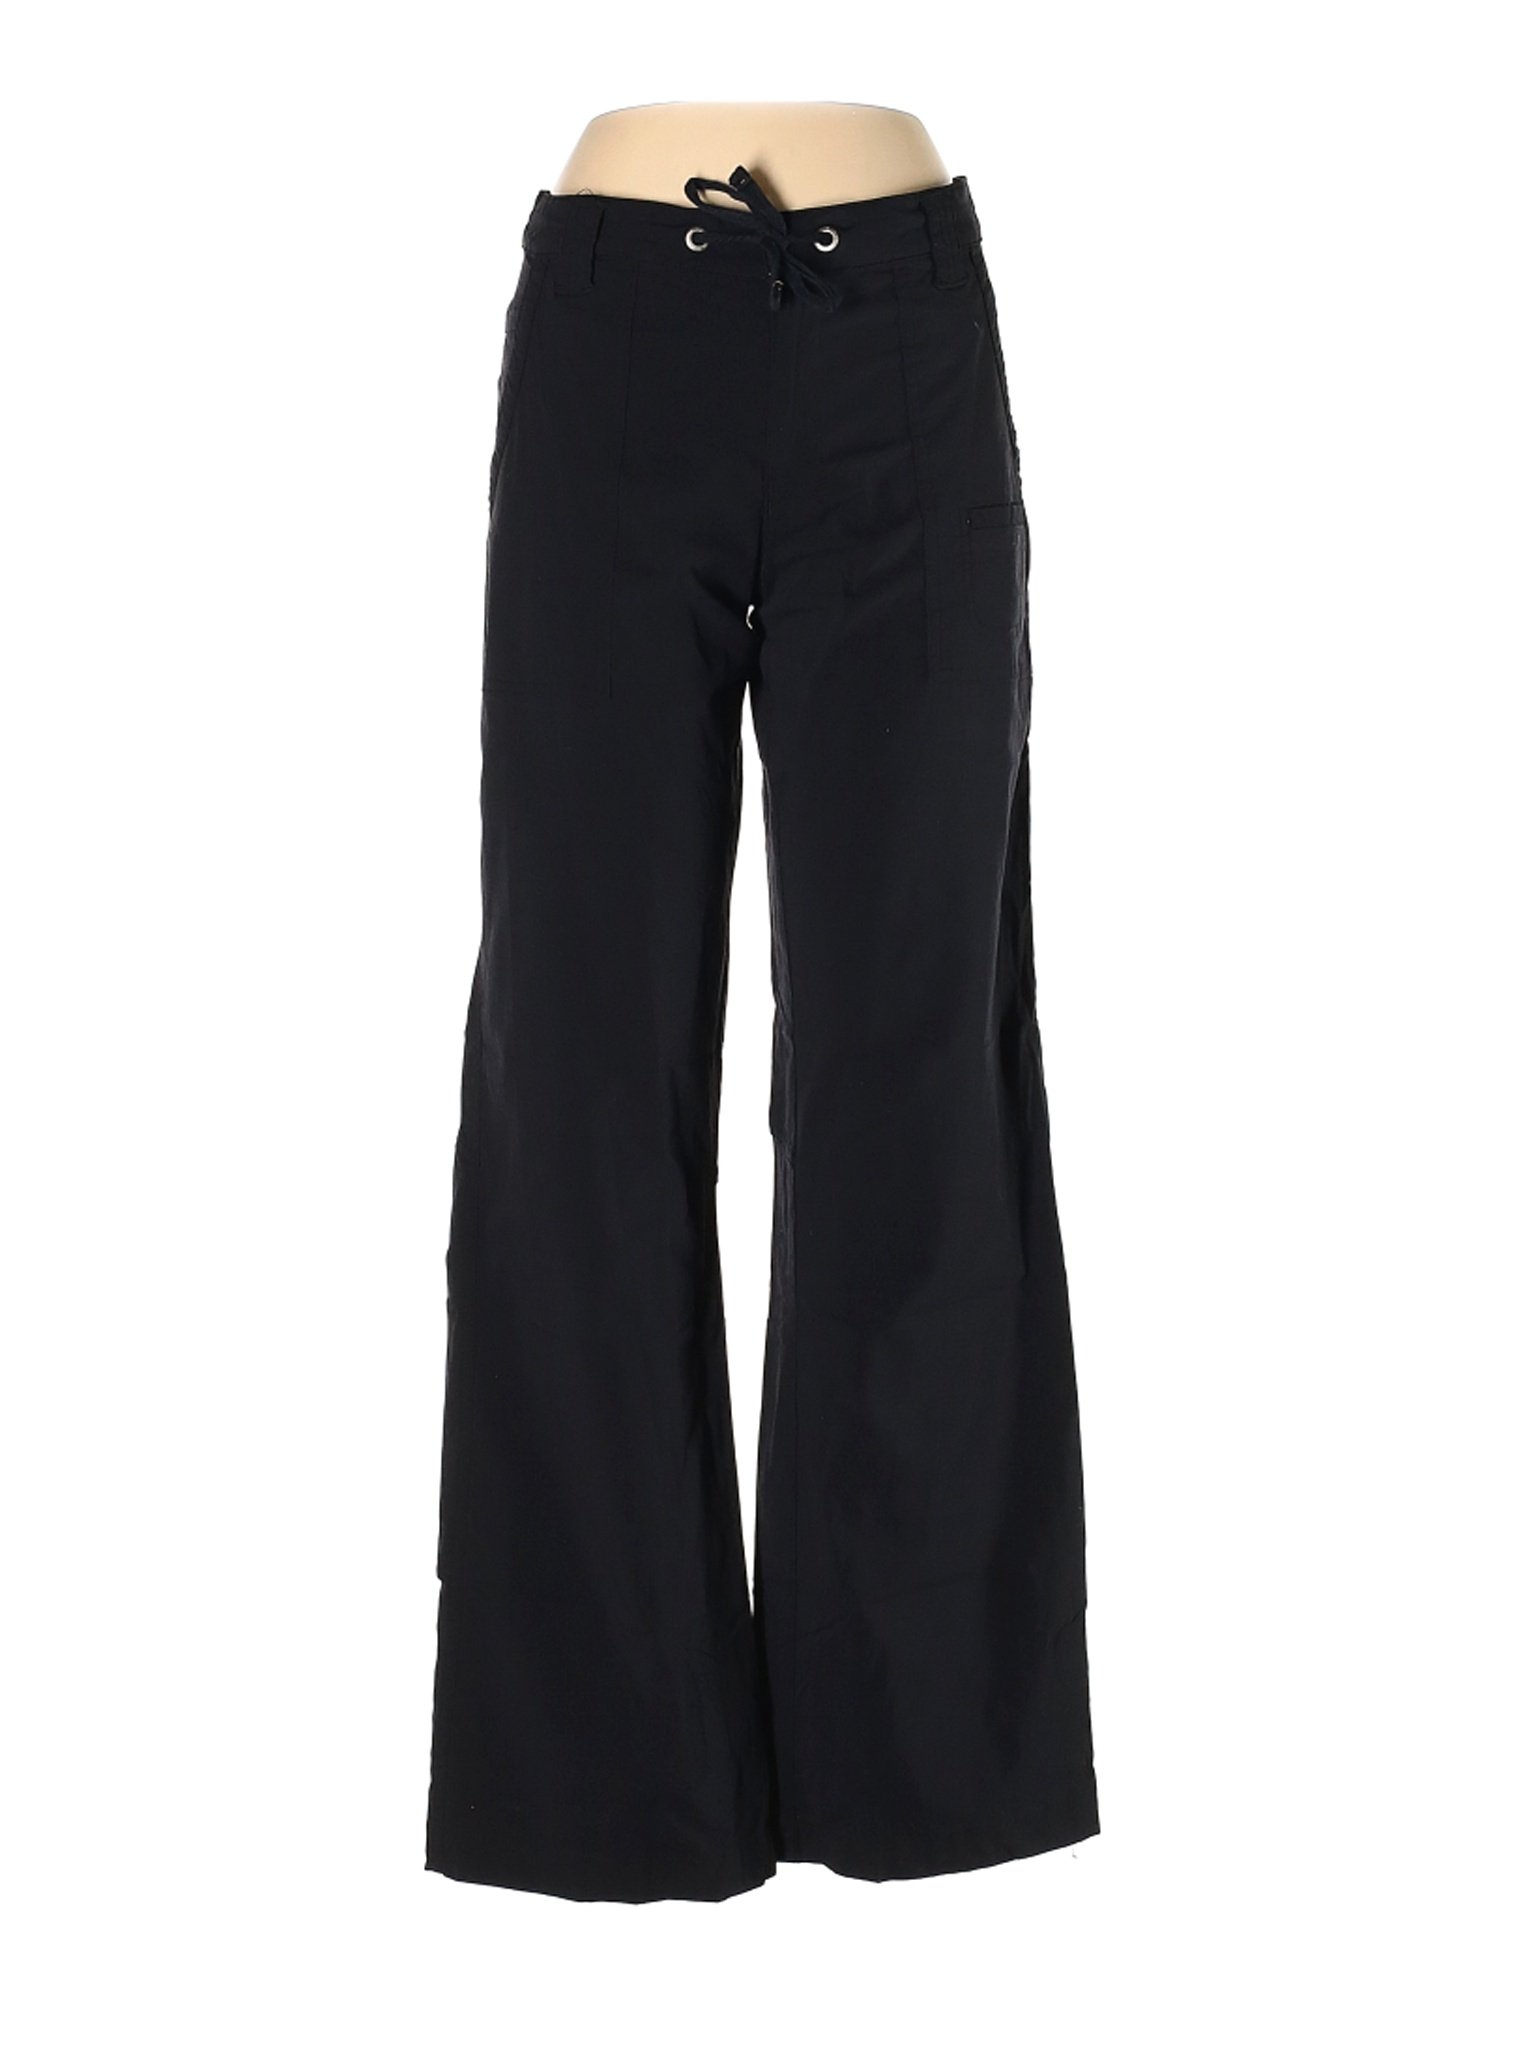 Lucy Women Black Active Pants M Tall | eBay